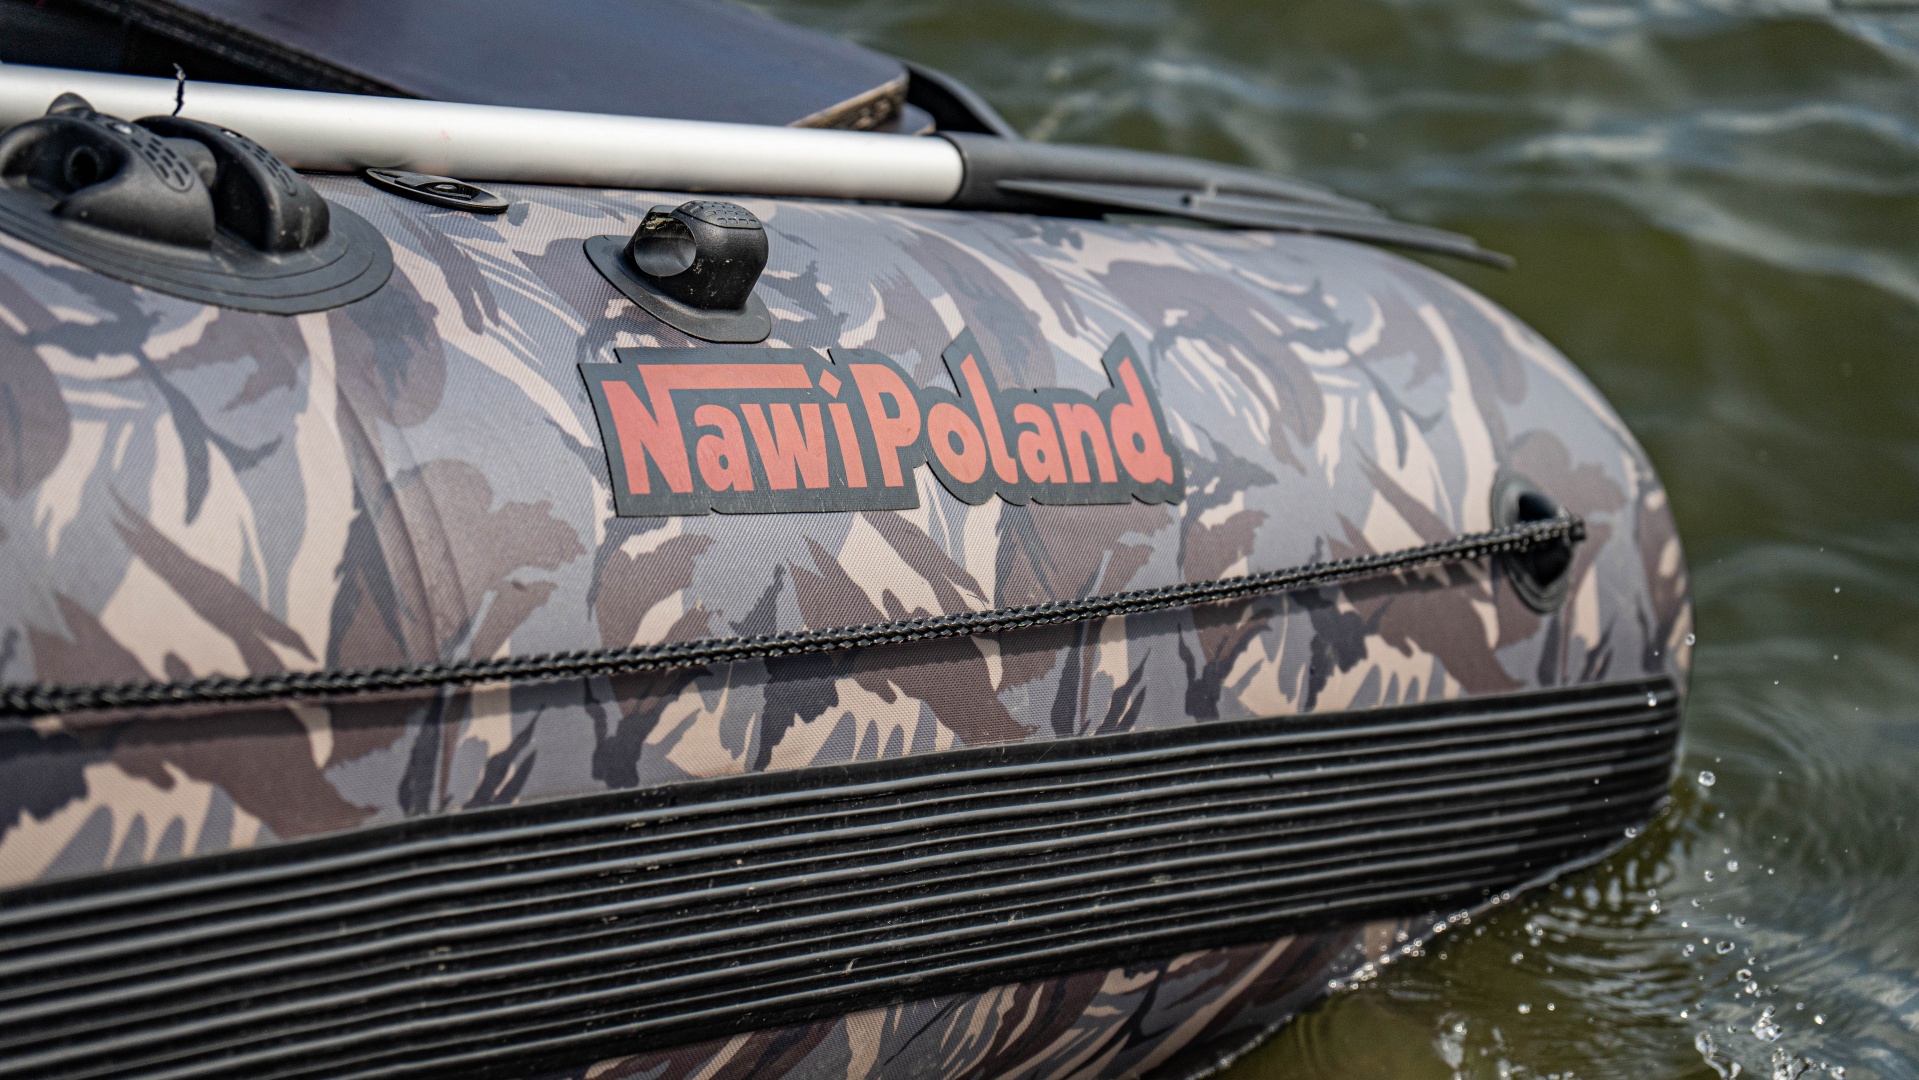 NawiPoland CAT 260 Inflatable Boat  - Katamarán